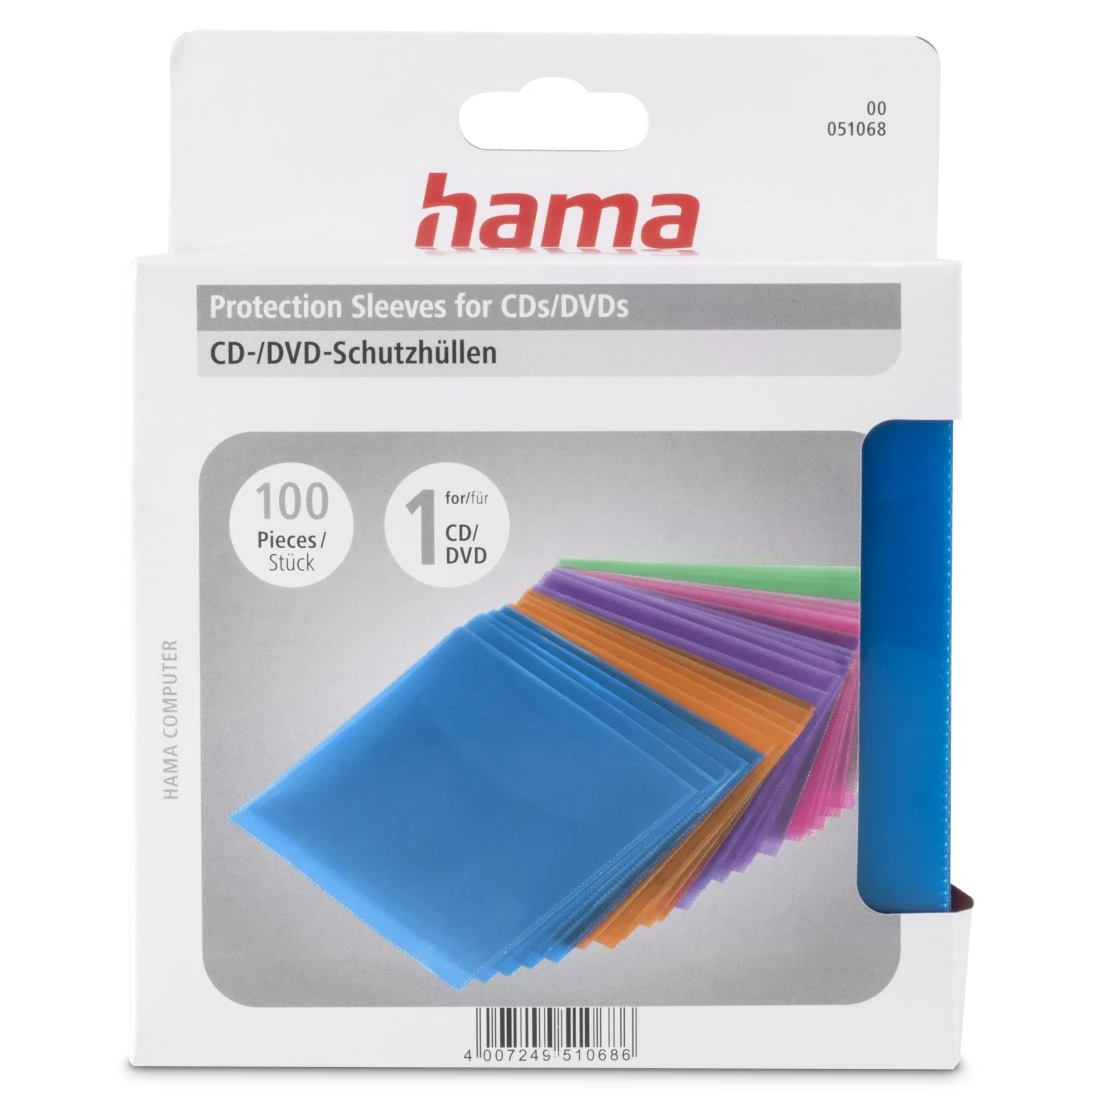 CD-/DVD-Schutzhüllen 100, Farbig | Hama